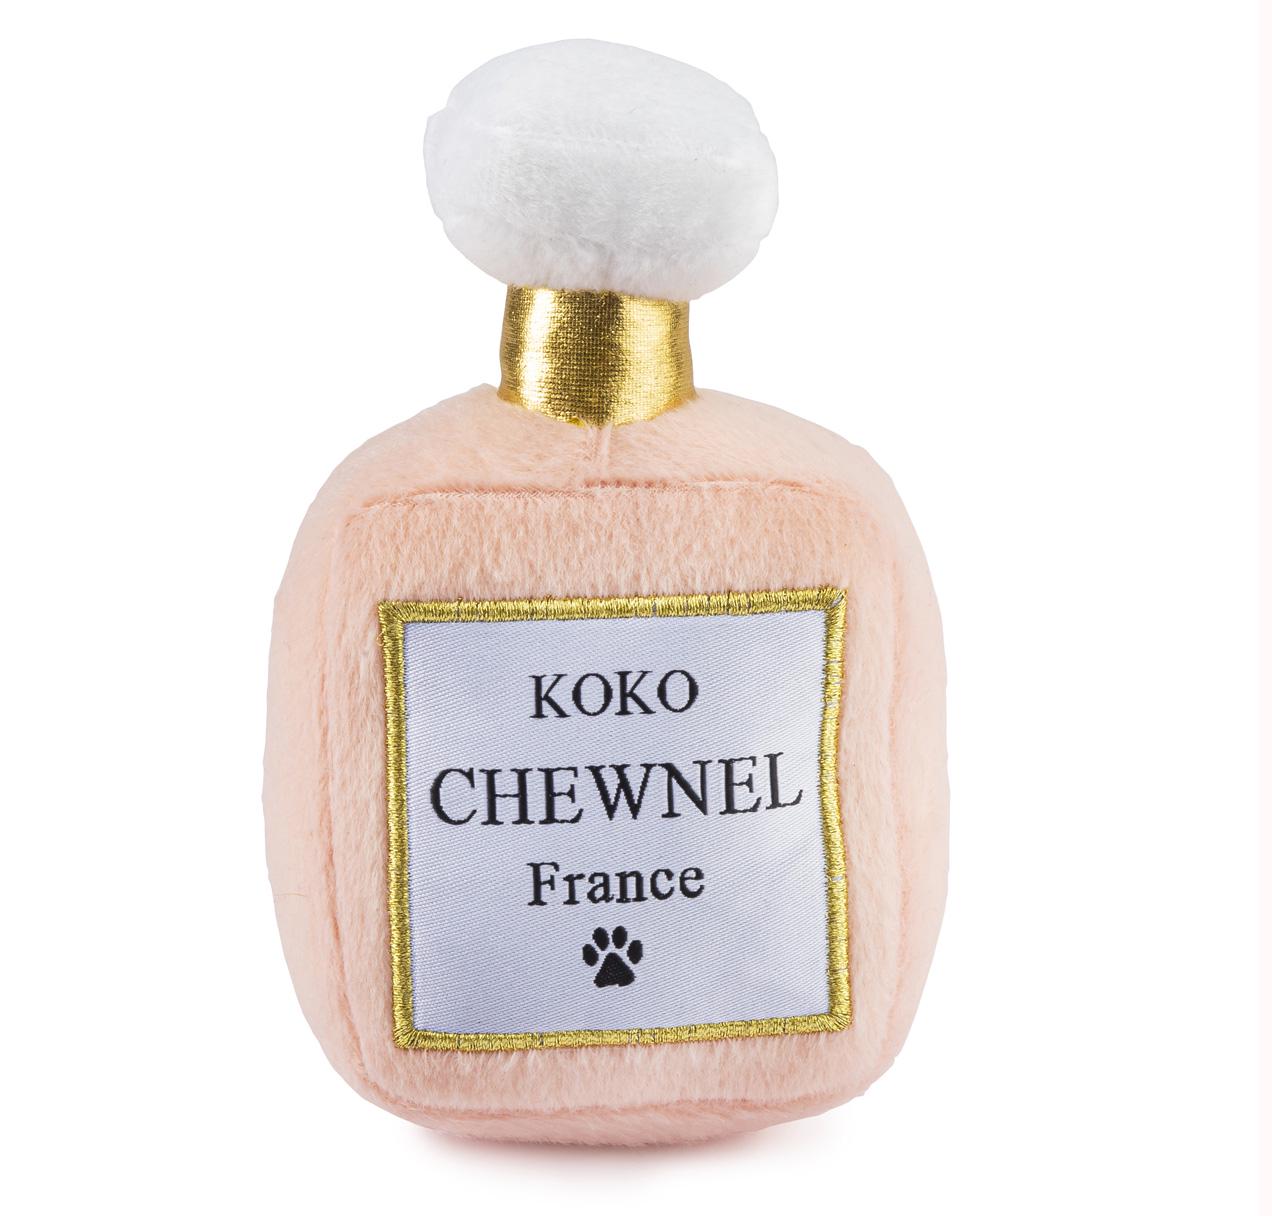 Koko Chewnel Perfume Toy - Scarvesnthangs